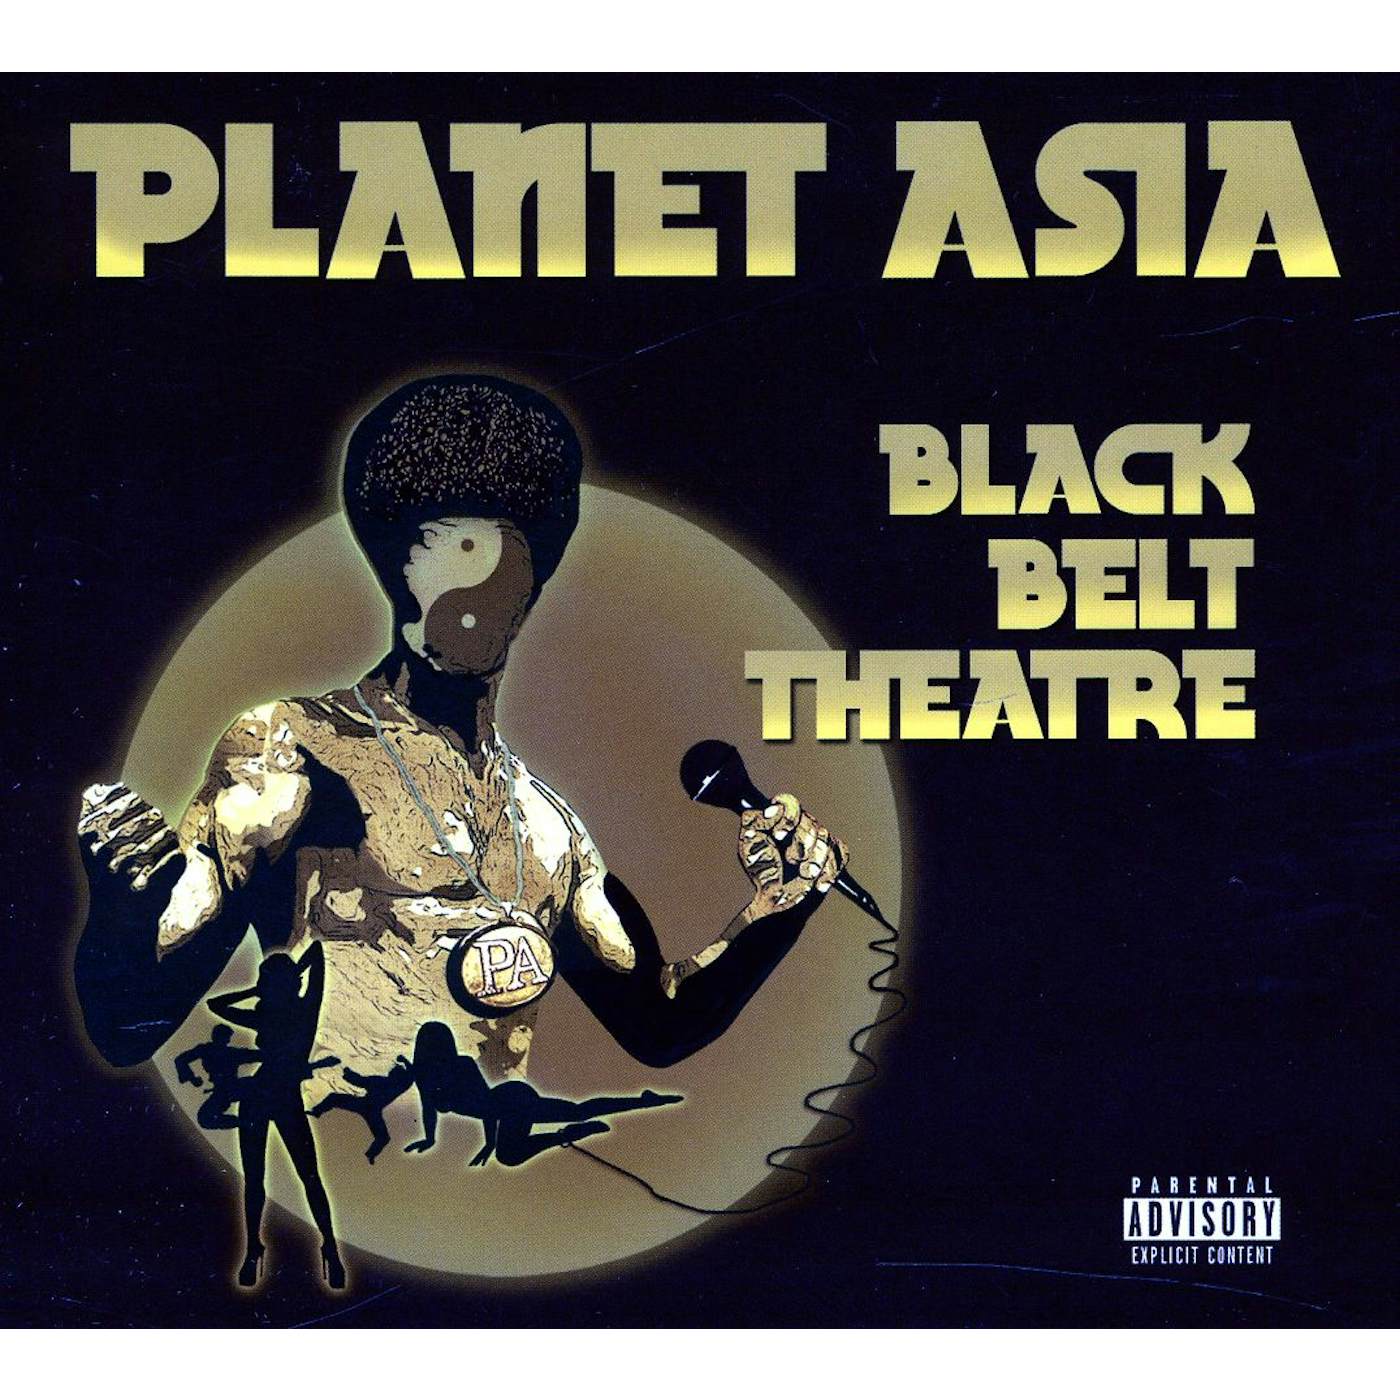 Planet Asia BLACK BELT THEATRE CD